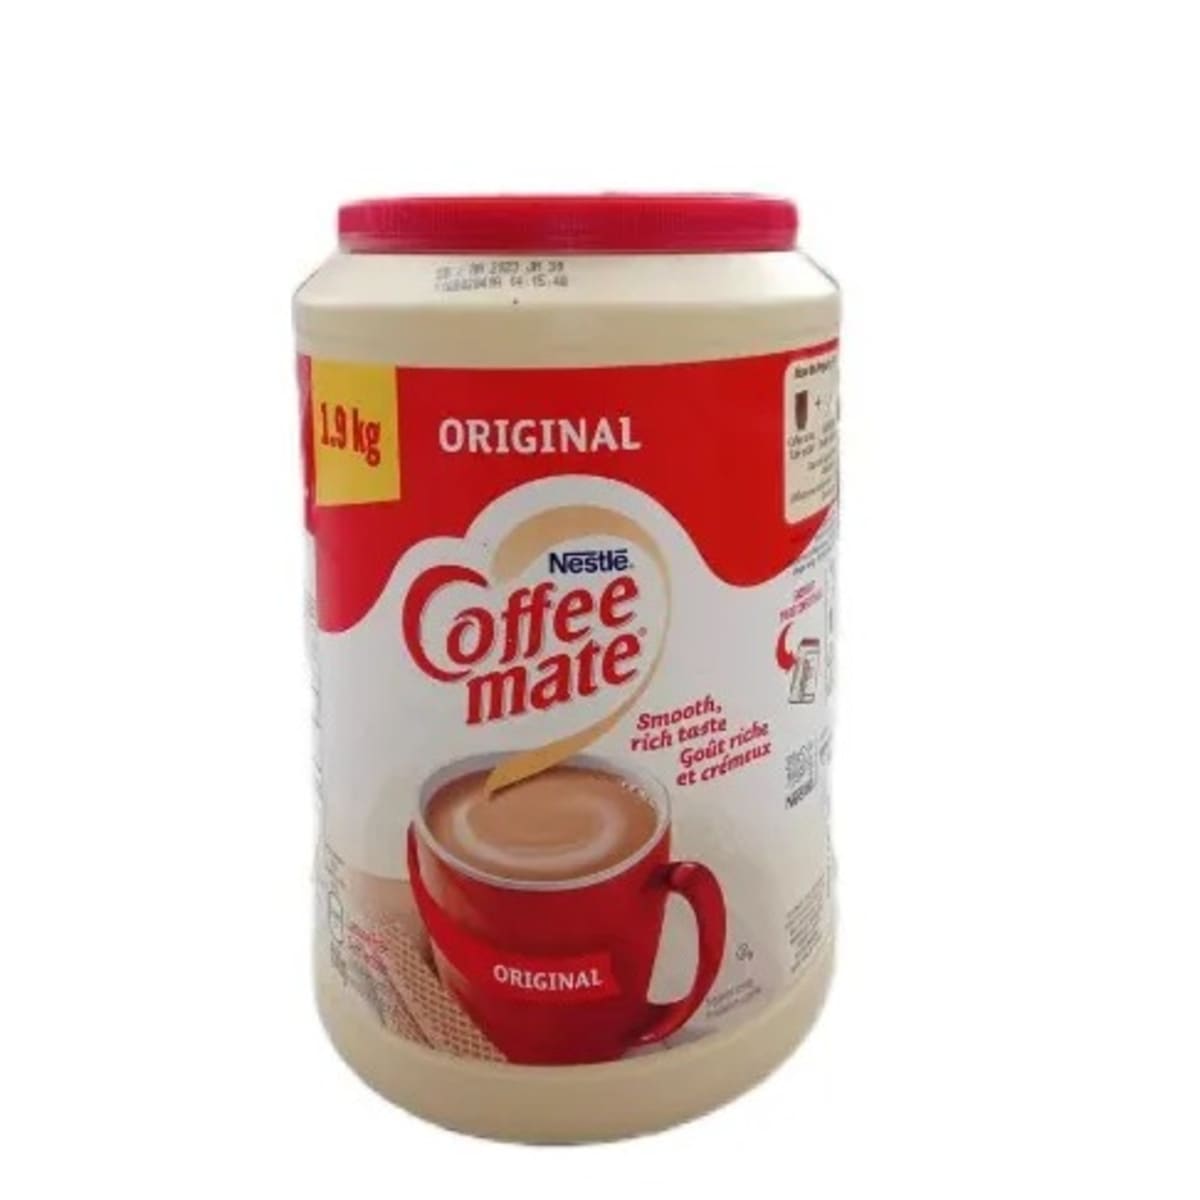 Nestle Coffee Mate Smooth Rich Taste - 1.9kg